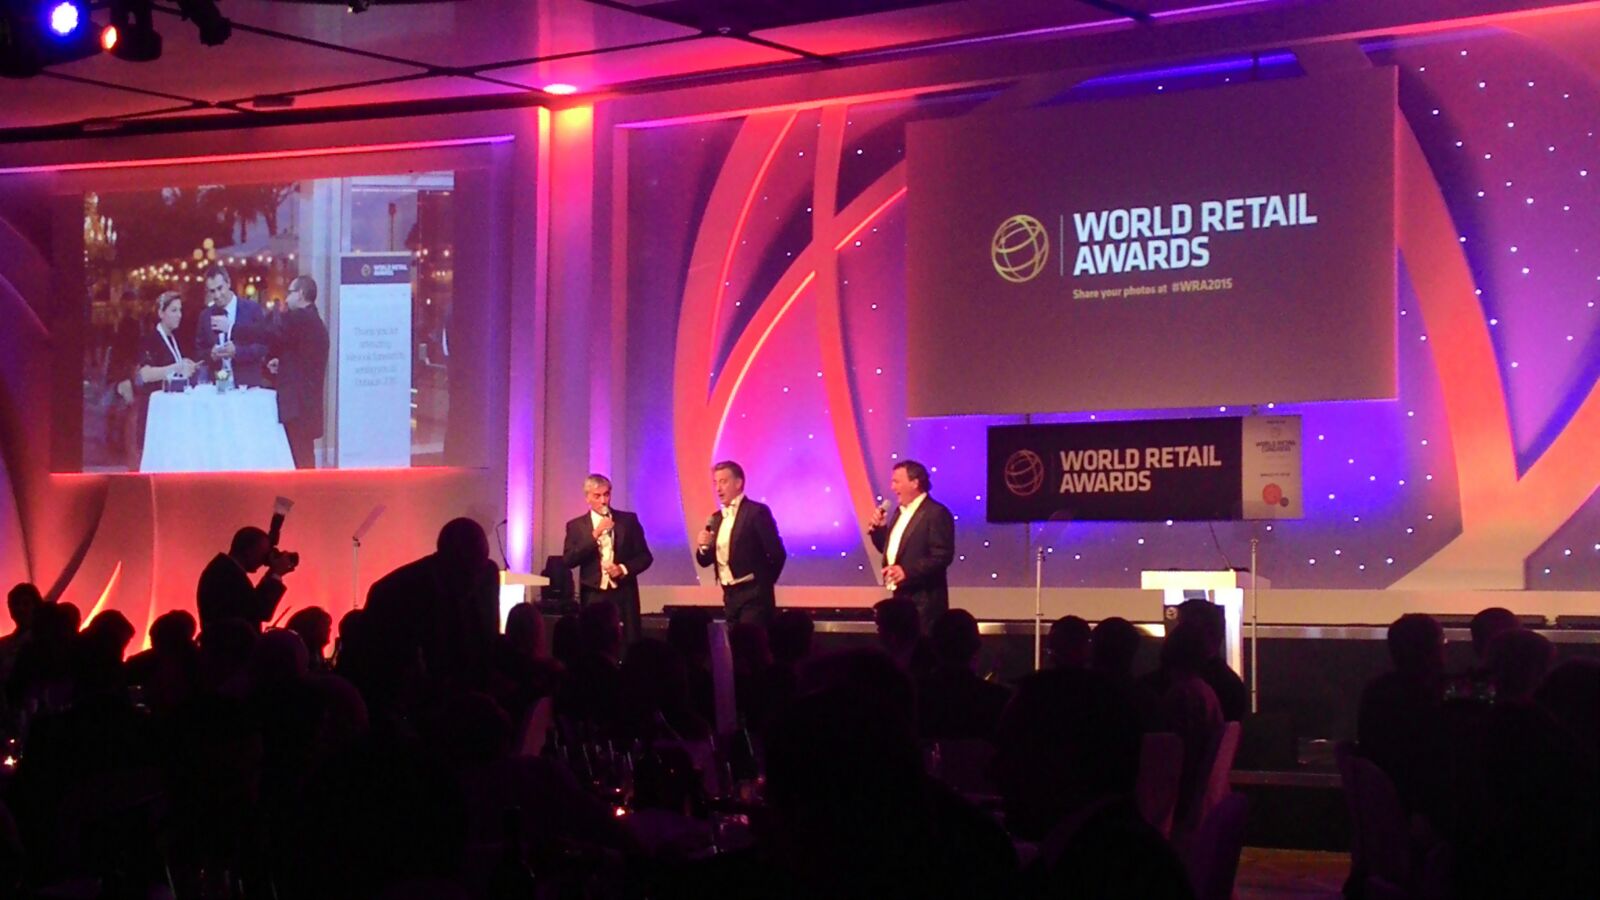 Poi is a World Retail Awards 2015 Finalist!